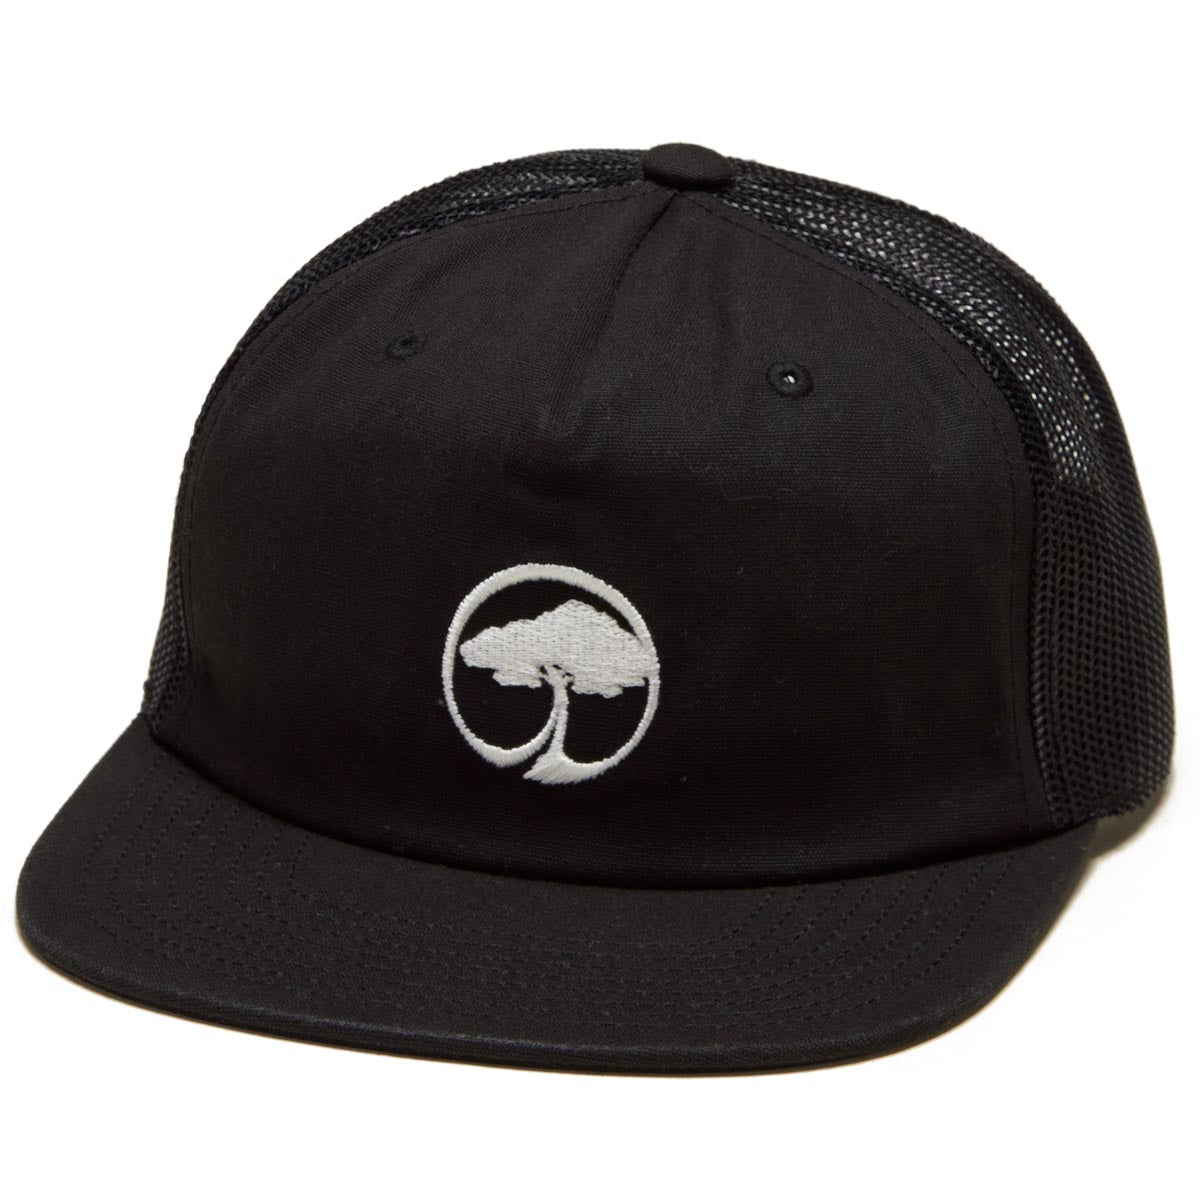 Arbor Icon Trucker Hat - Black image 1